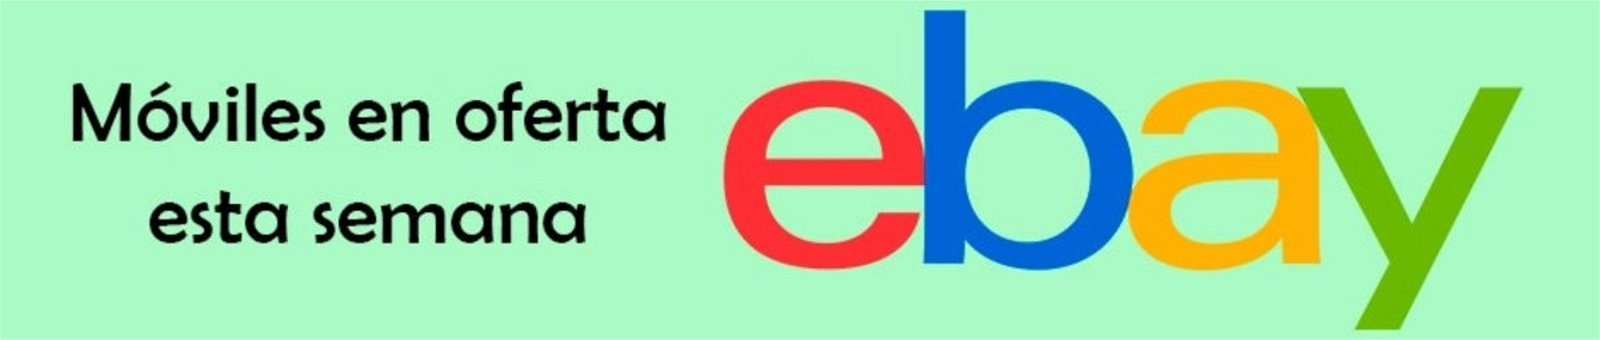 banner eBay ofertas móviles